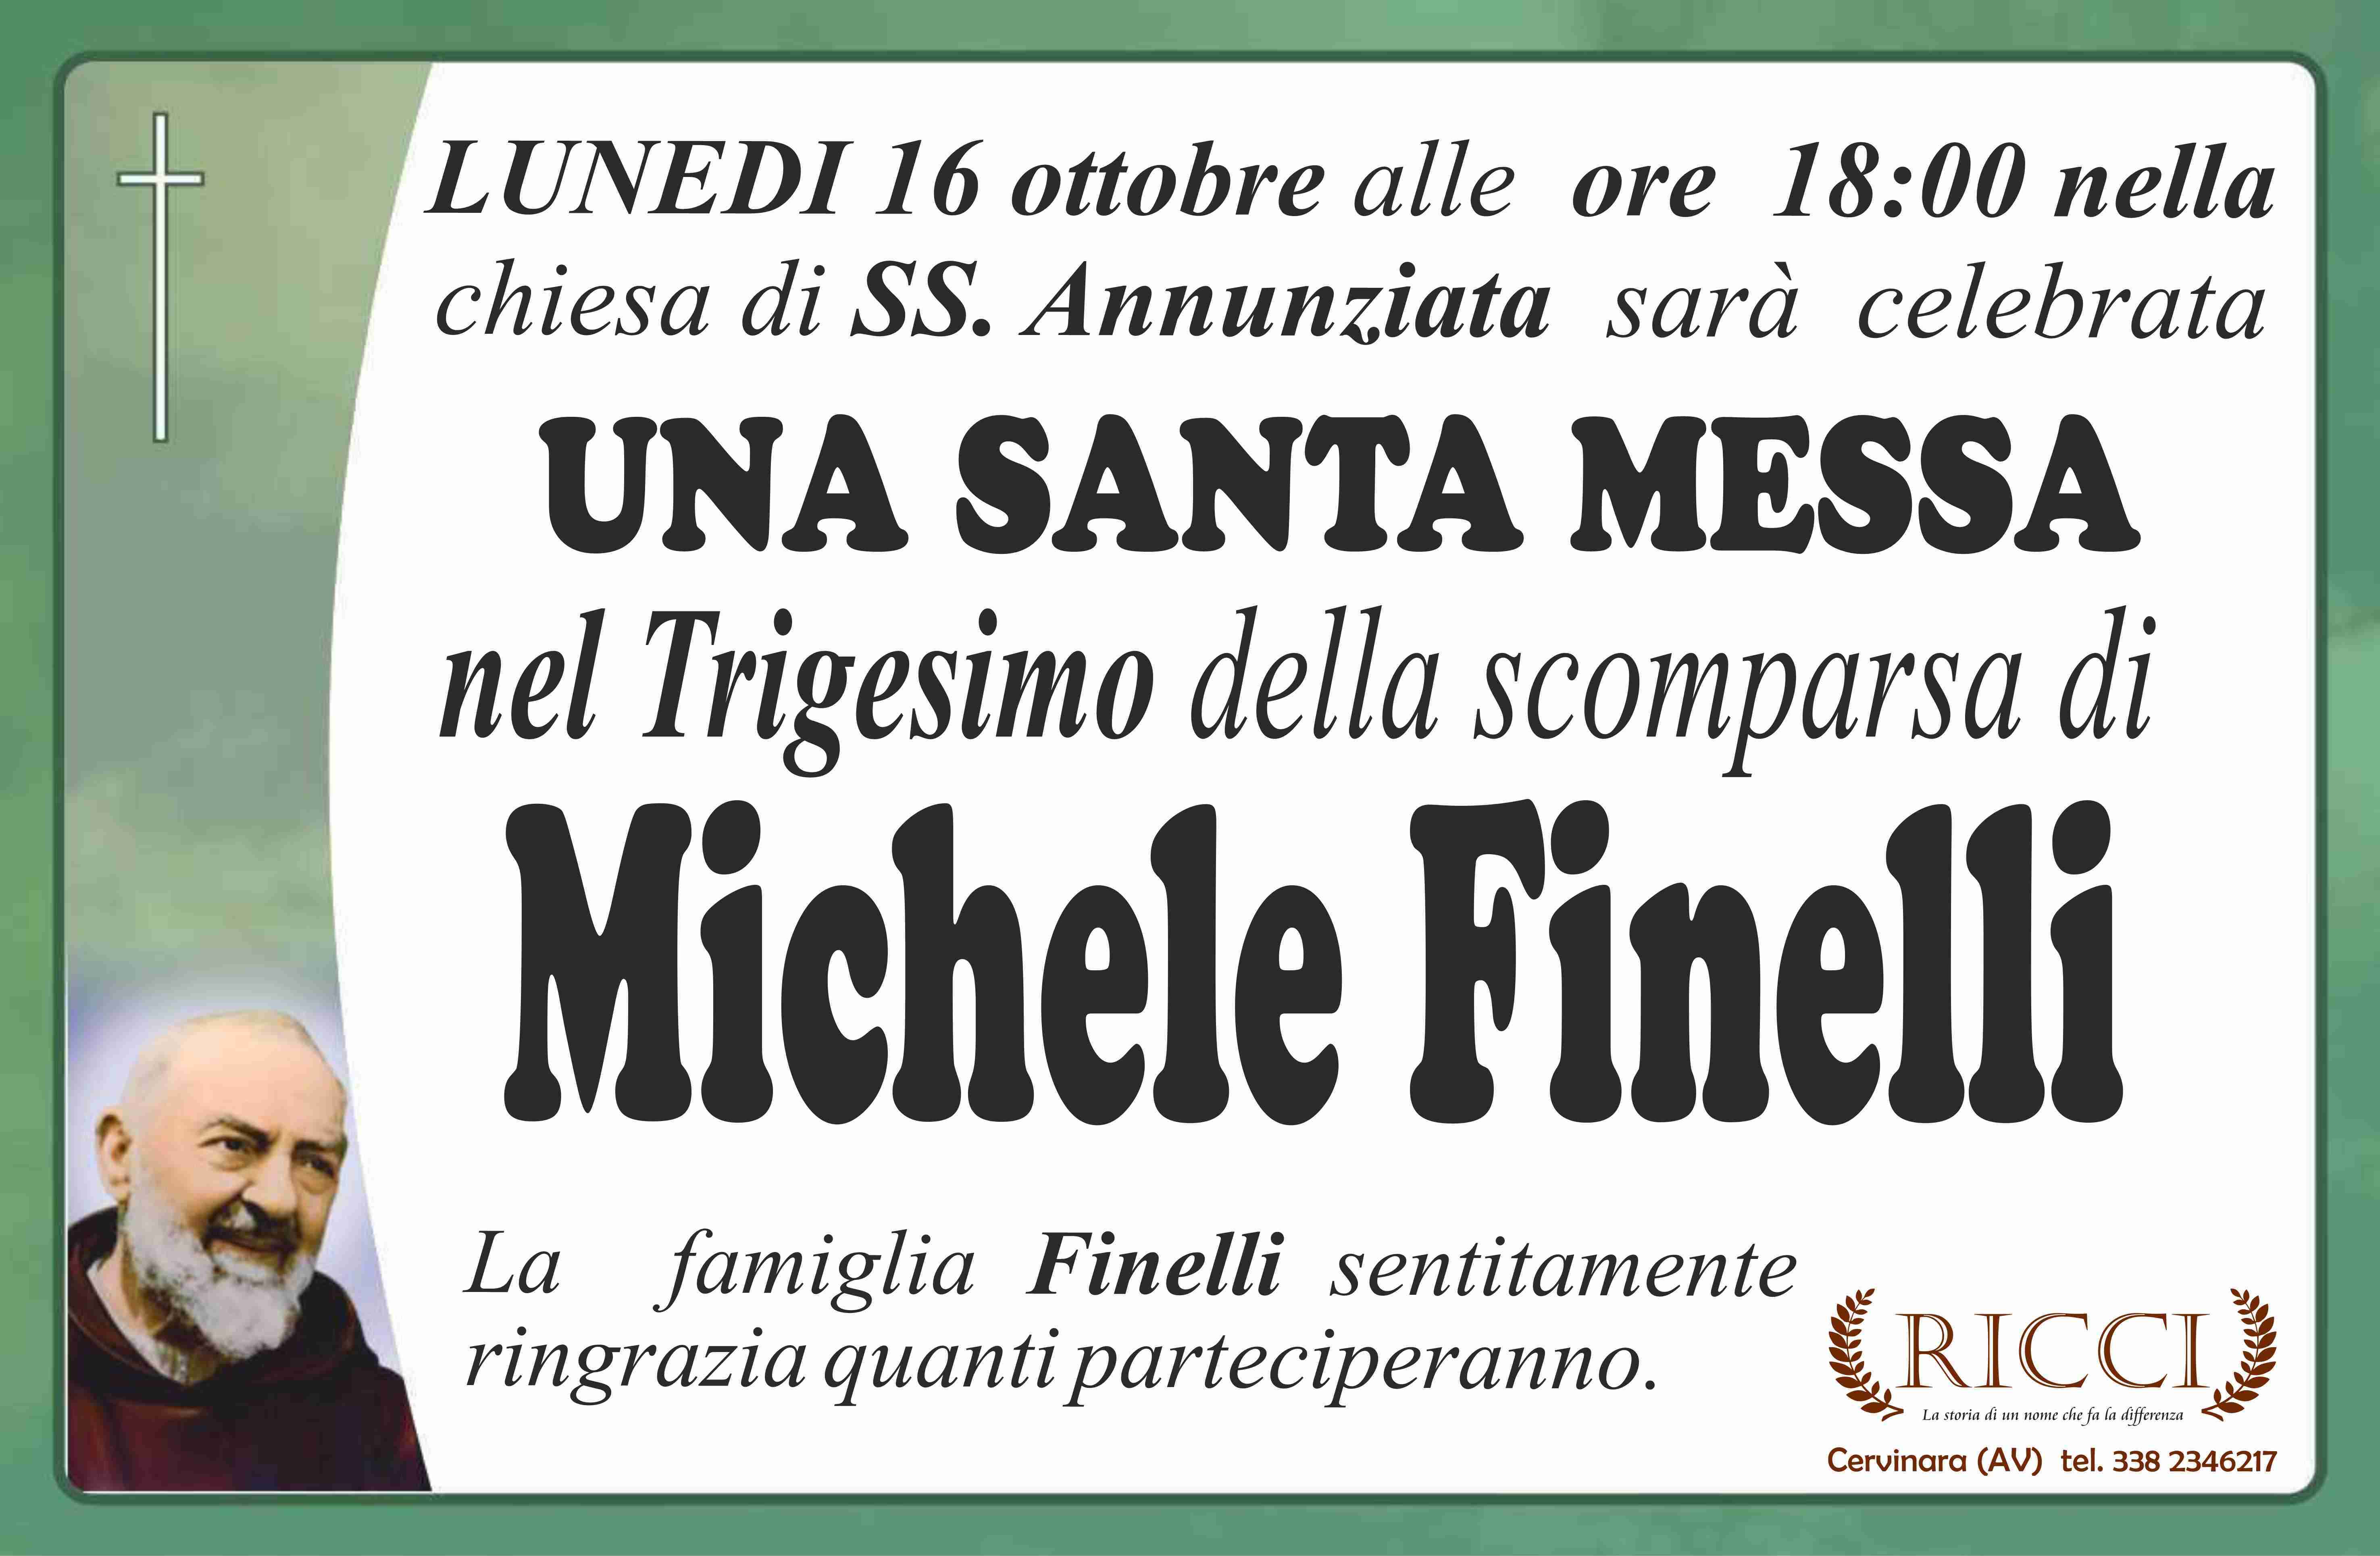 Michele Finelli